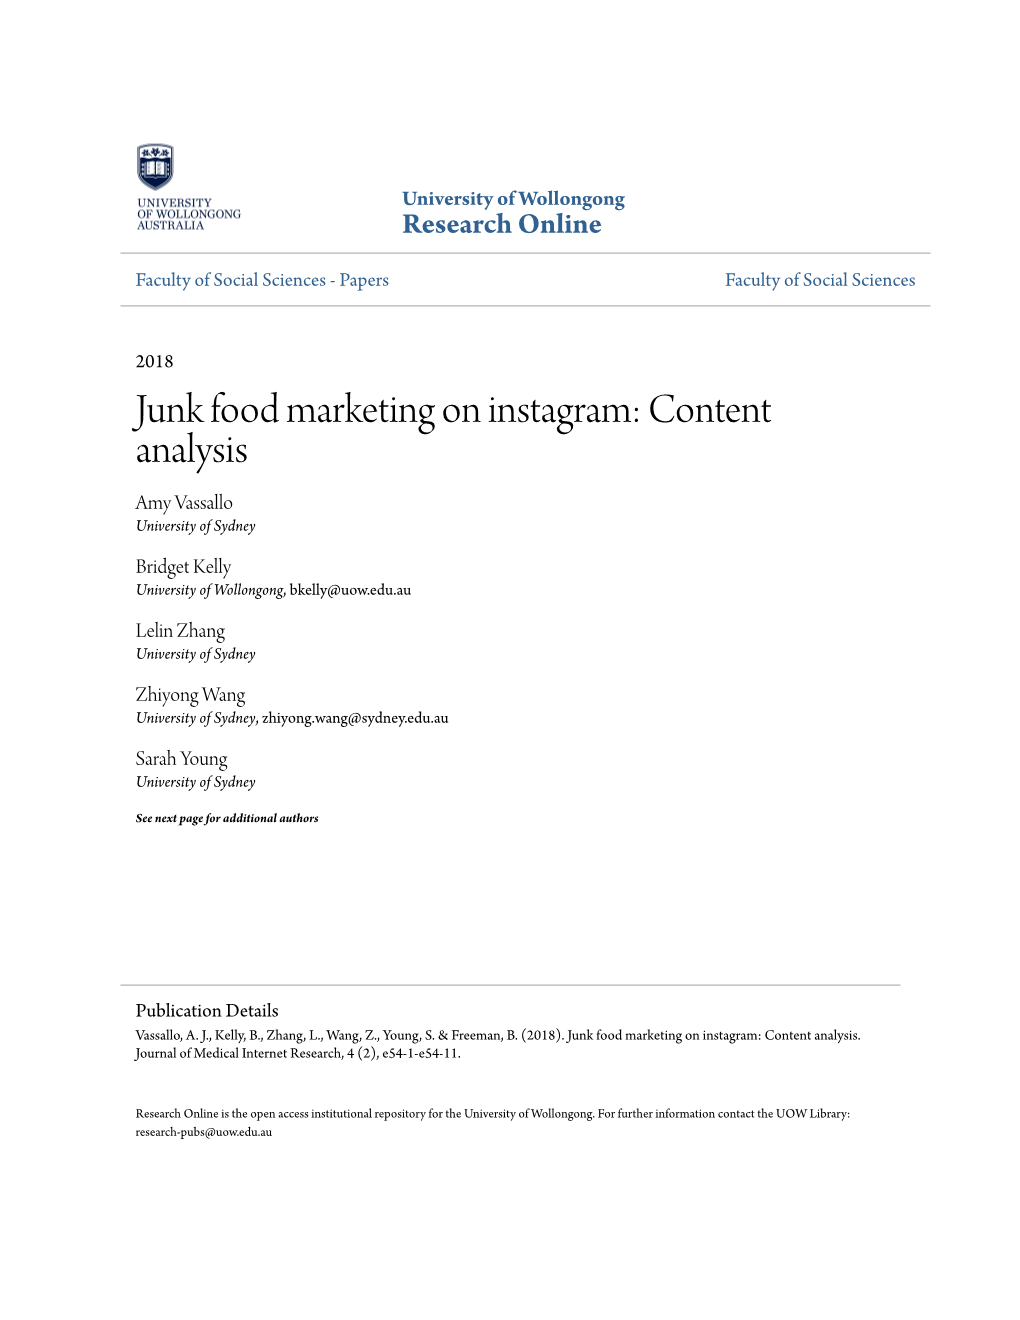 Junk Food Marketing on Instagram: Content Analysis Amy Vassallo University of Sydney